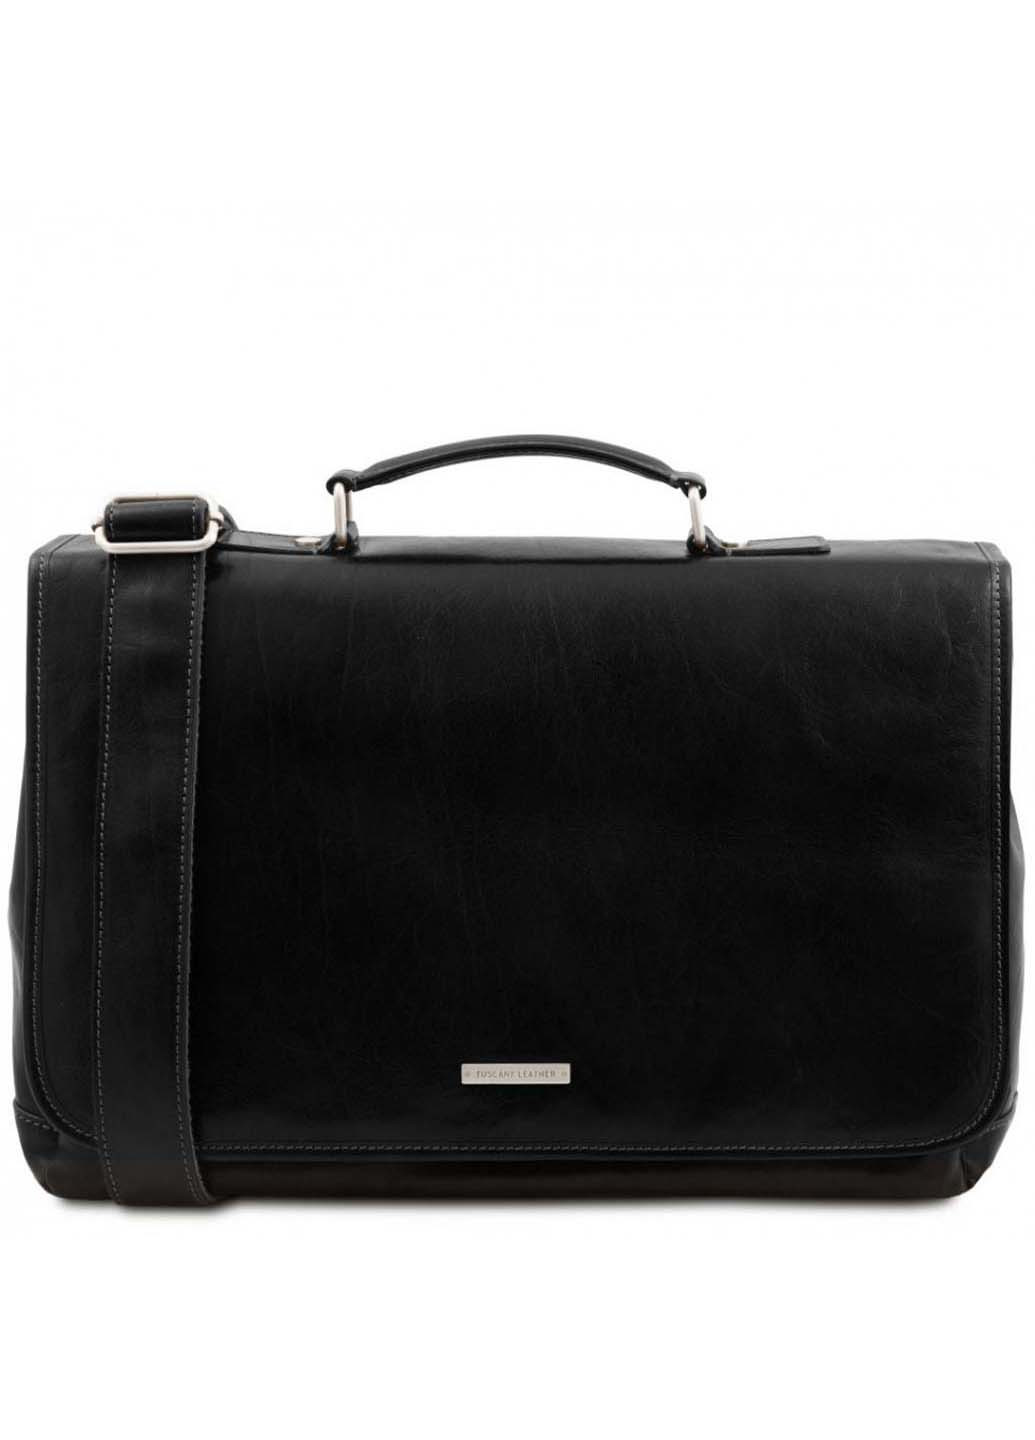 Кожаная сумка портфель Mantova TL SMART TL142068 Tuscany Leather (257996359)